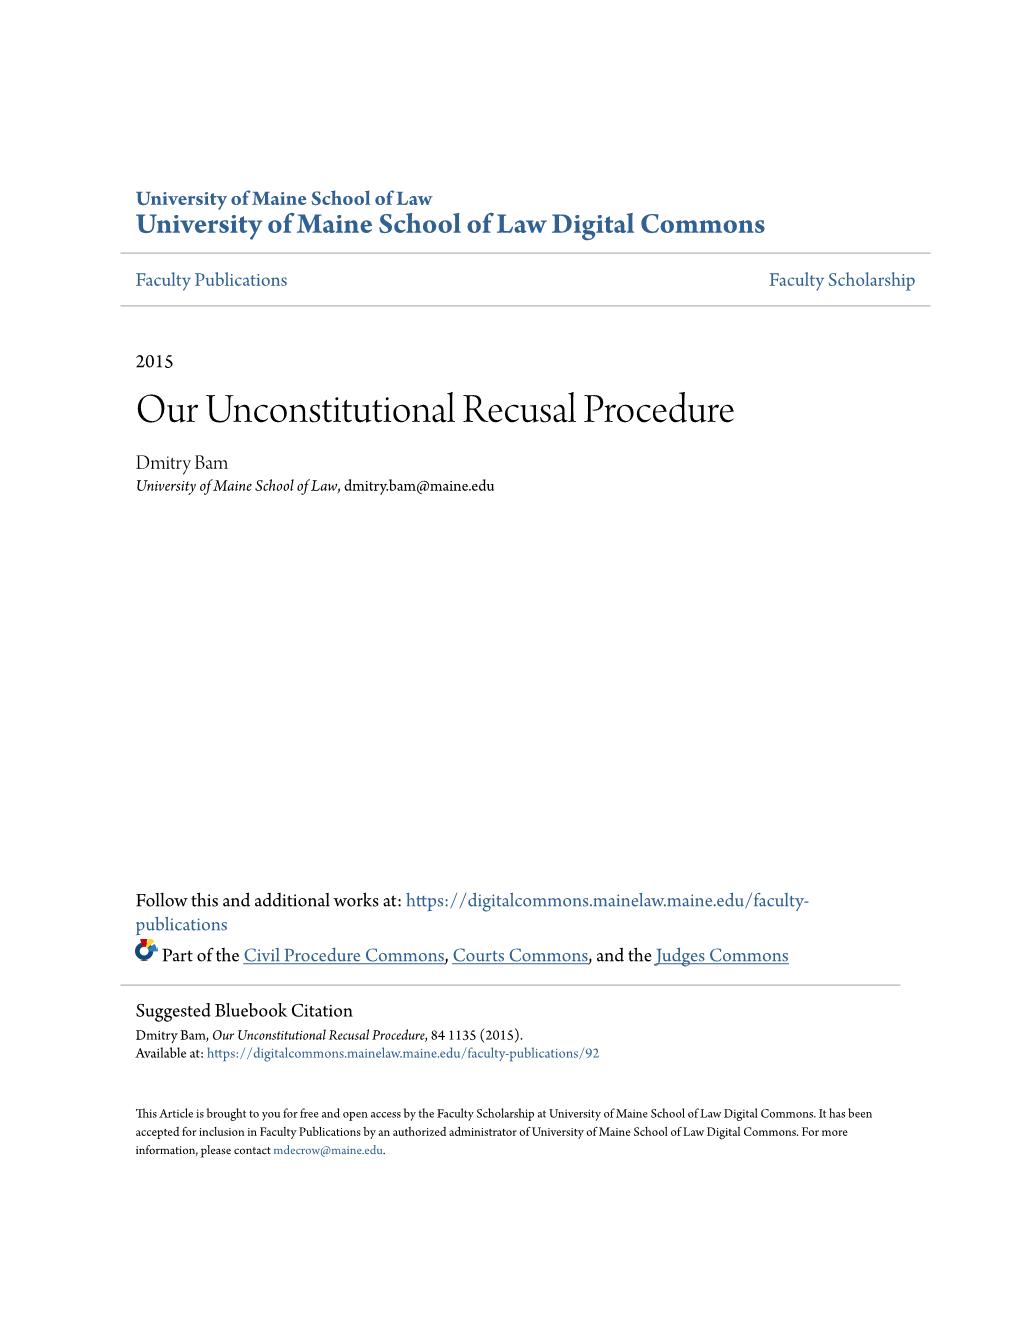 Our Unconstitutional Recusal Procedure Dmitry Bam University of Maine School of Law, Dmitry.Bam@Maine.Edu